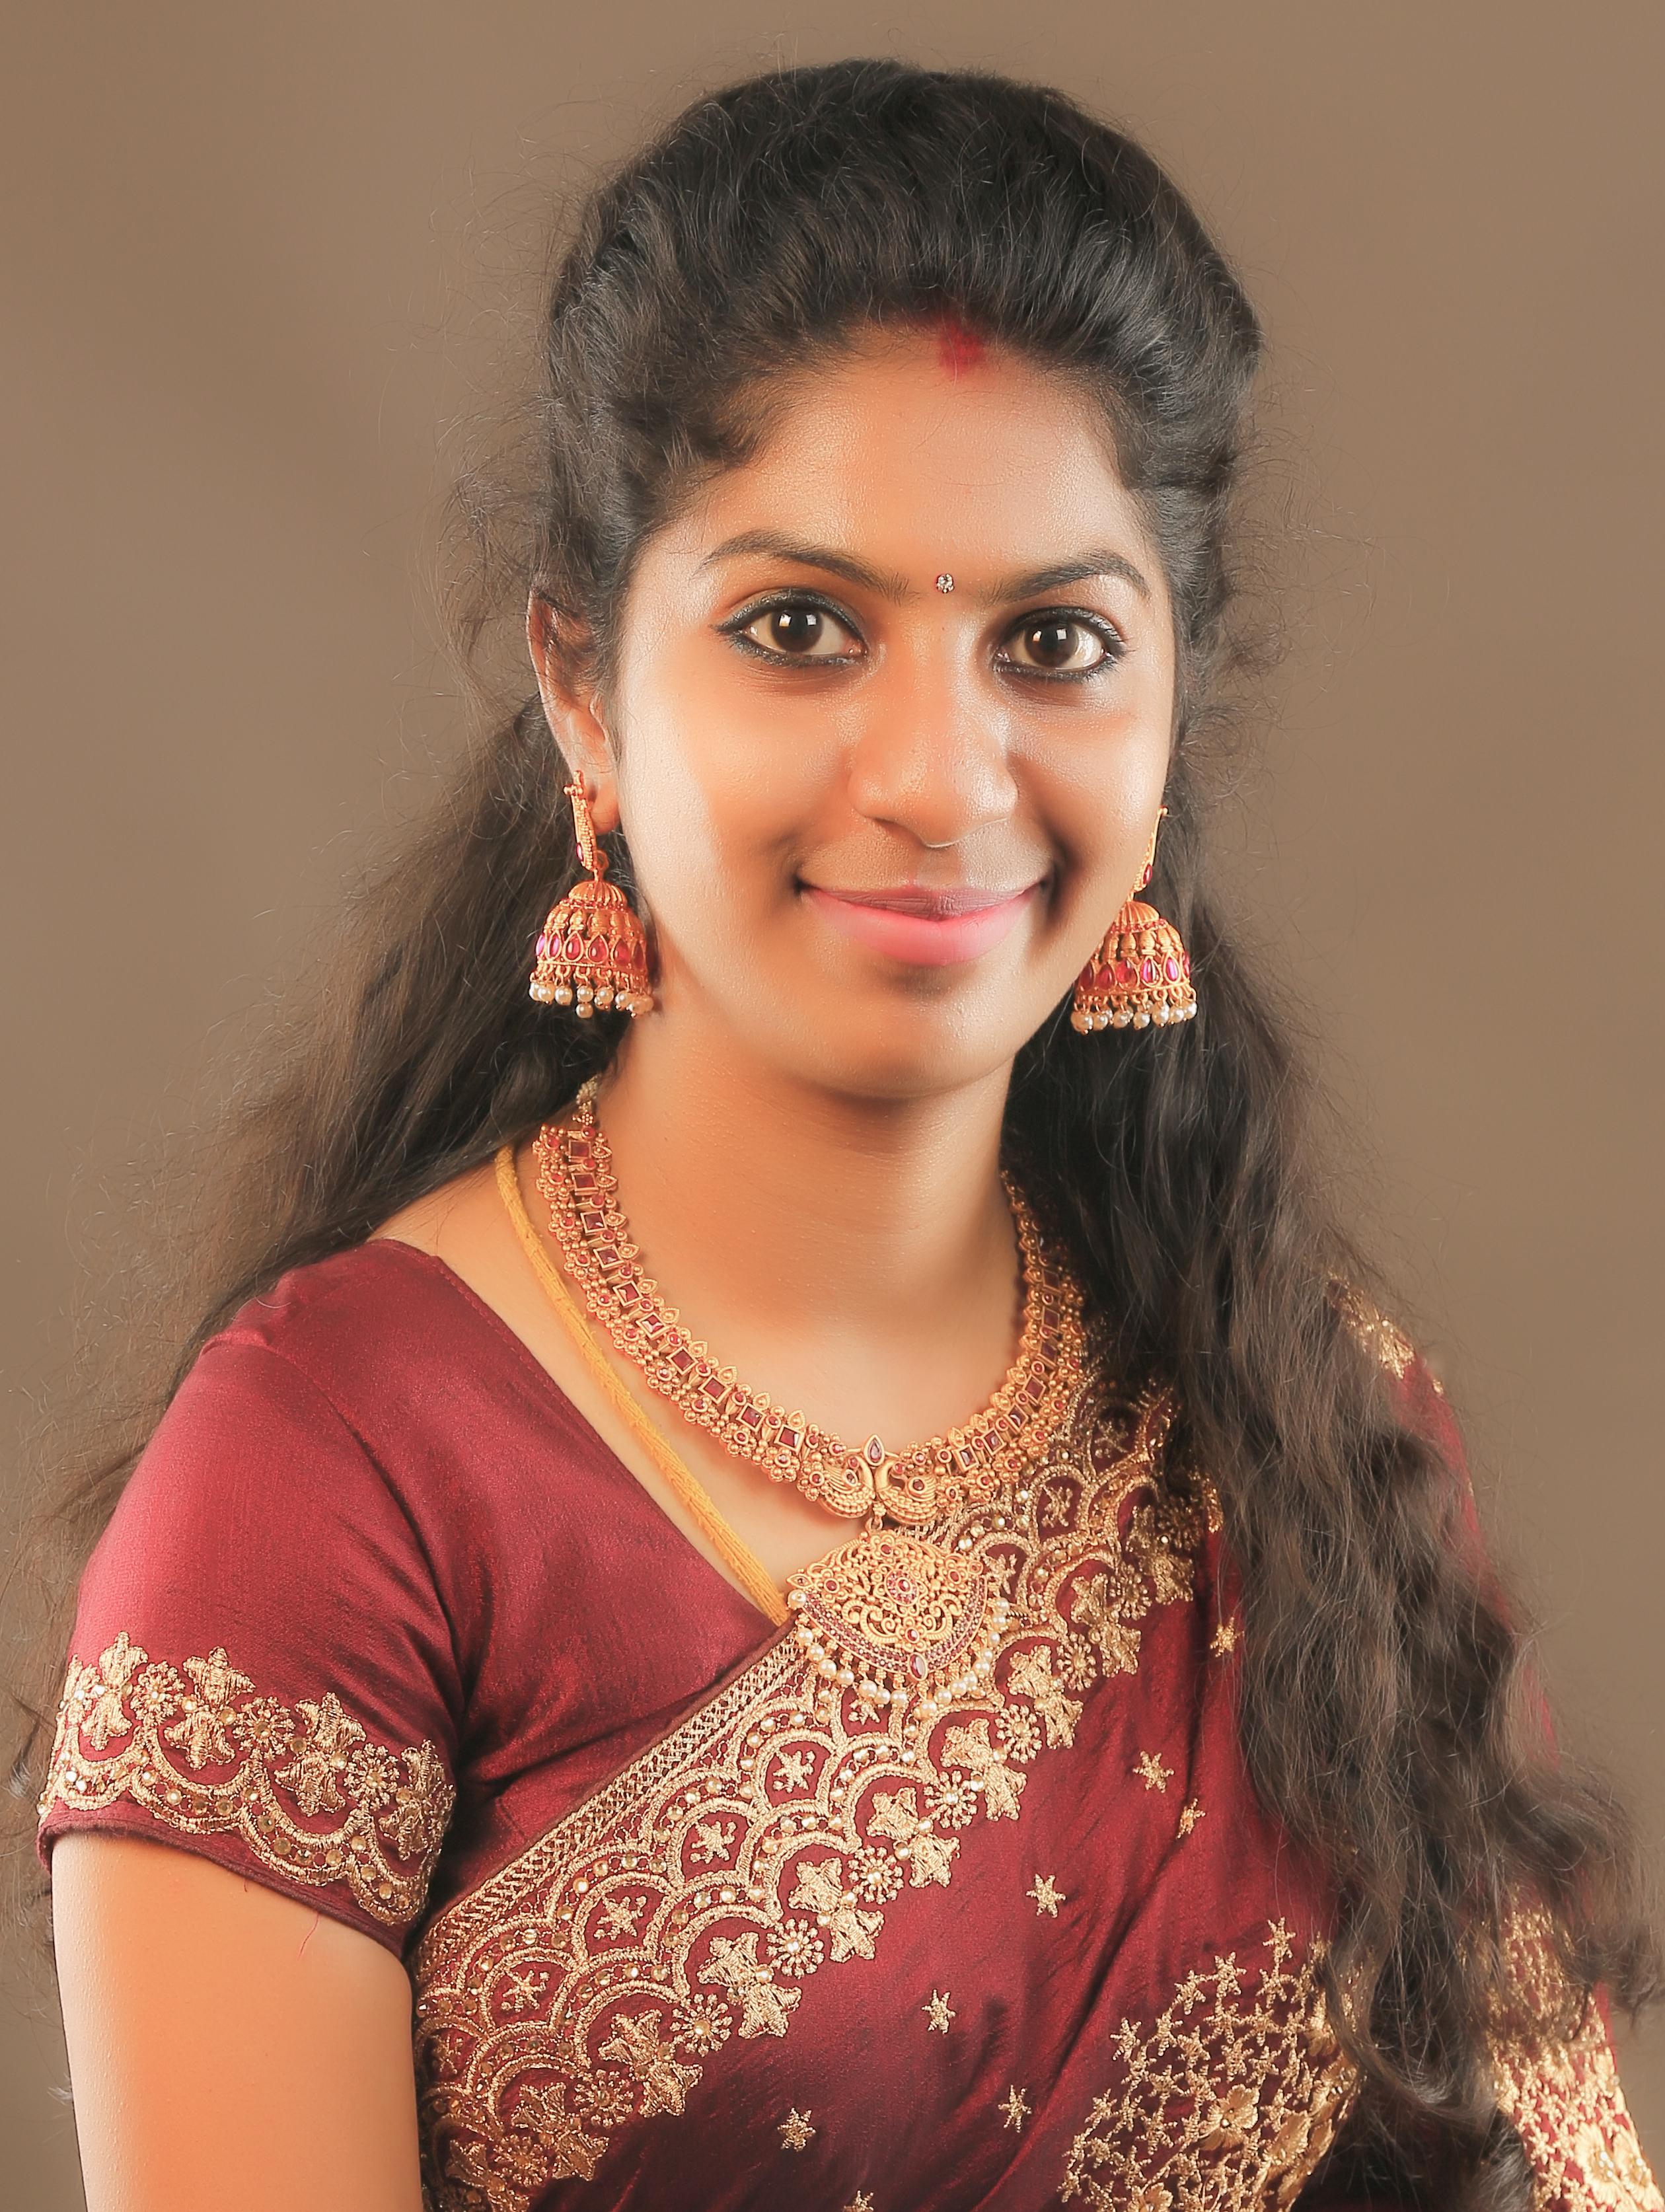 Ms. Sandheya